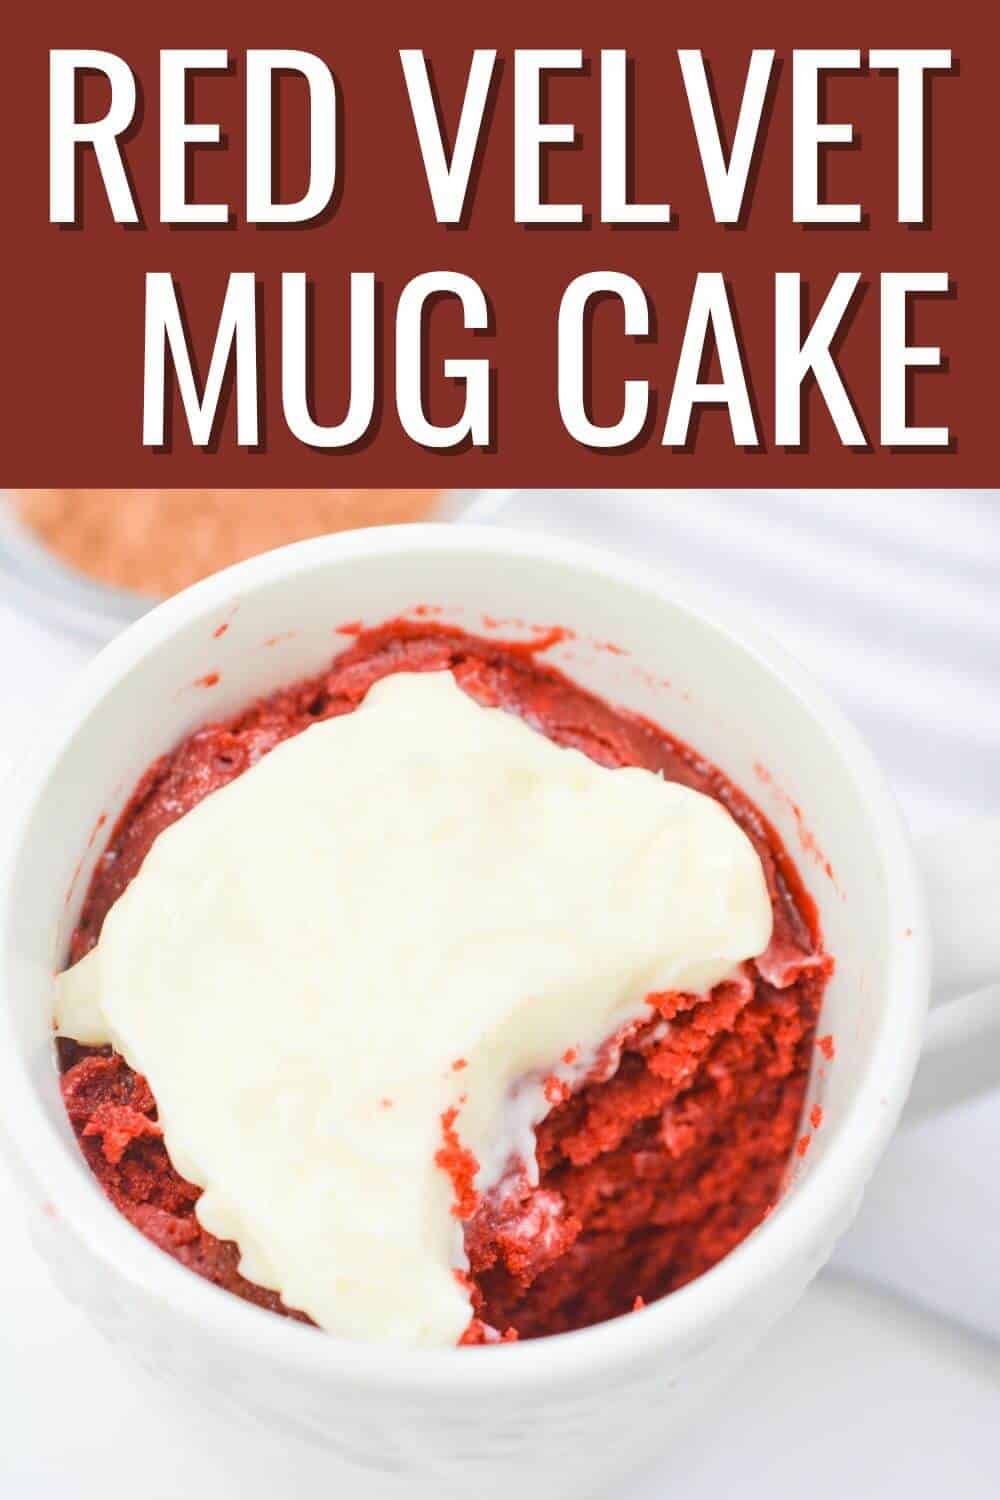 Red velvet mug cake with recipe title text overlay.